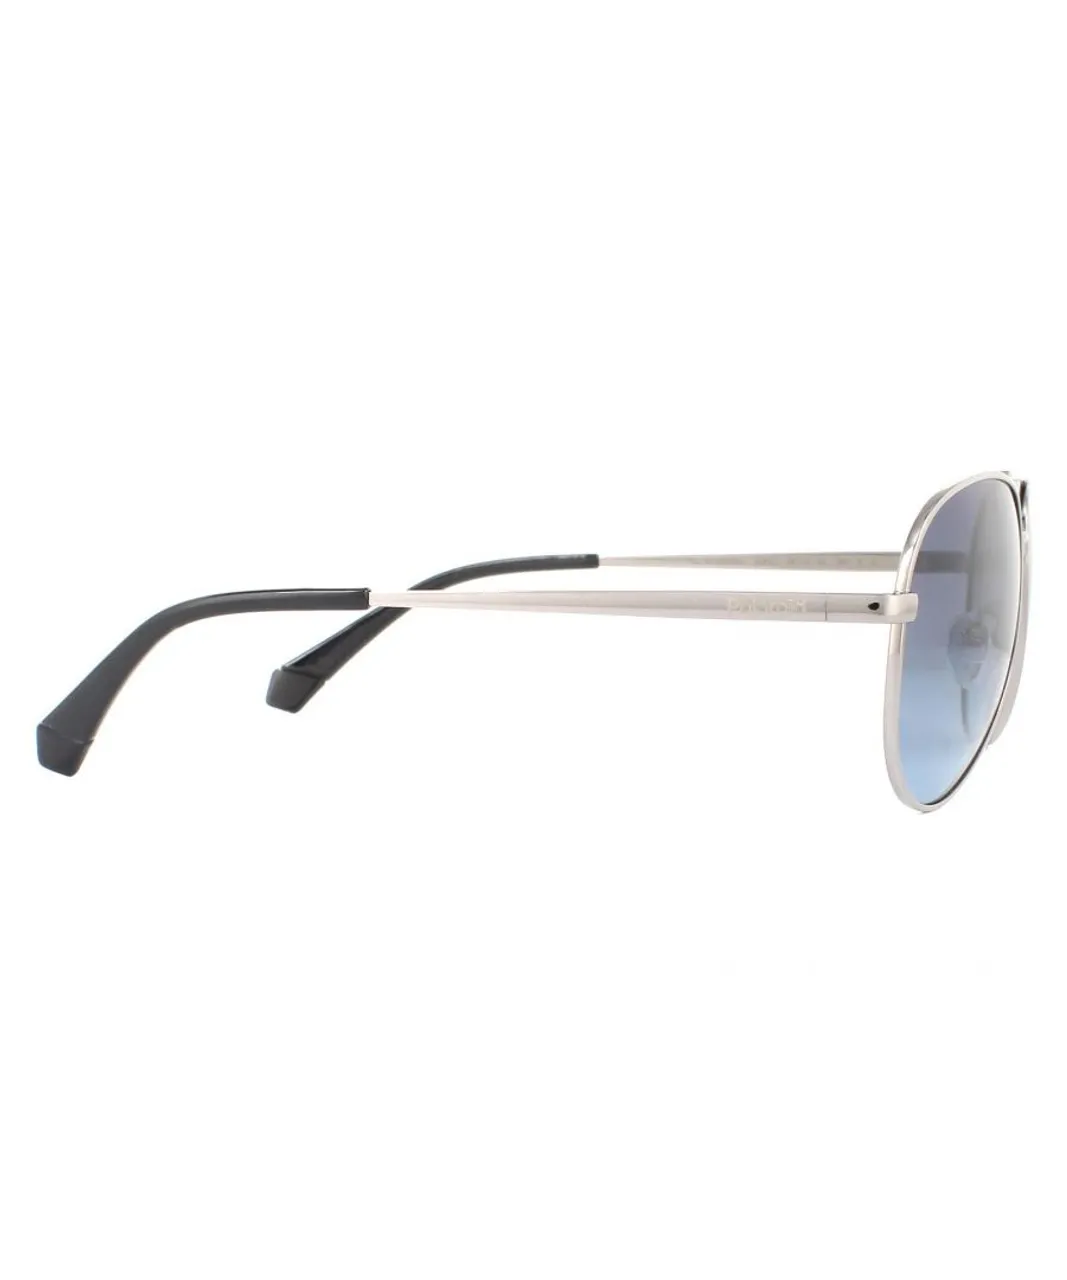 Polaroid Unisex Sunglasses PLD 6012/N/NEW 6LB WJ Ruthenium Grey Gradient Polarized Metal - One